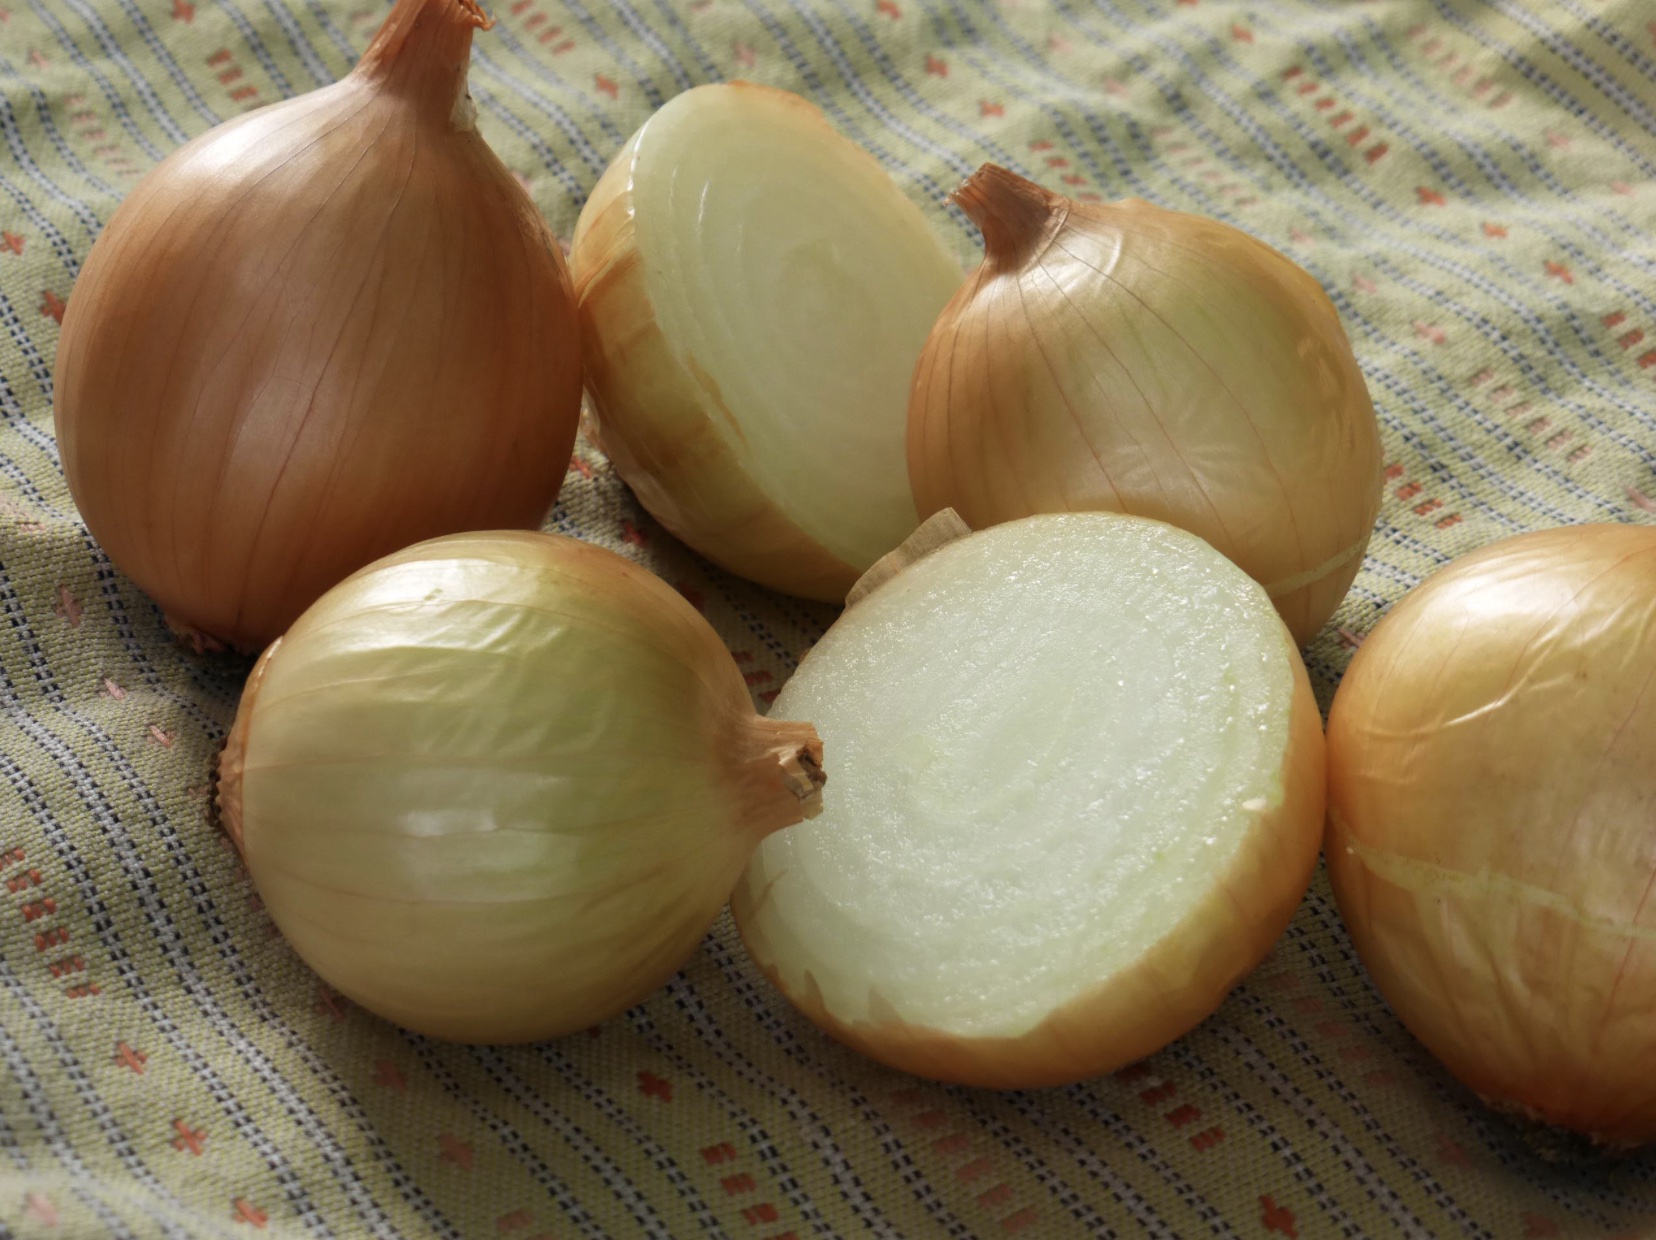 Texas Early Grano Onions